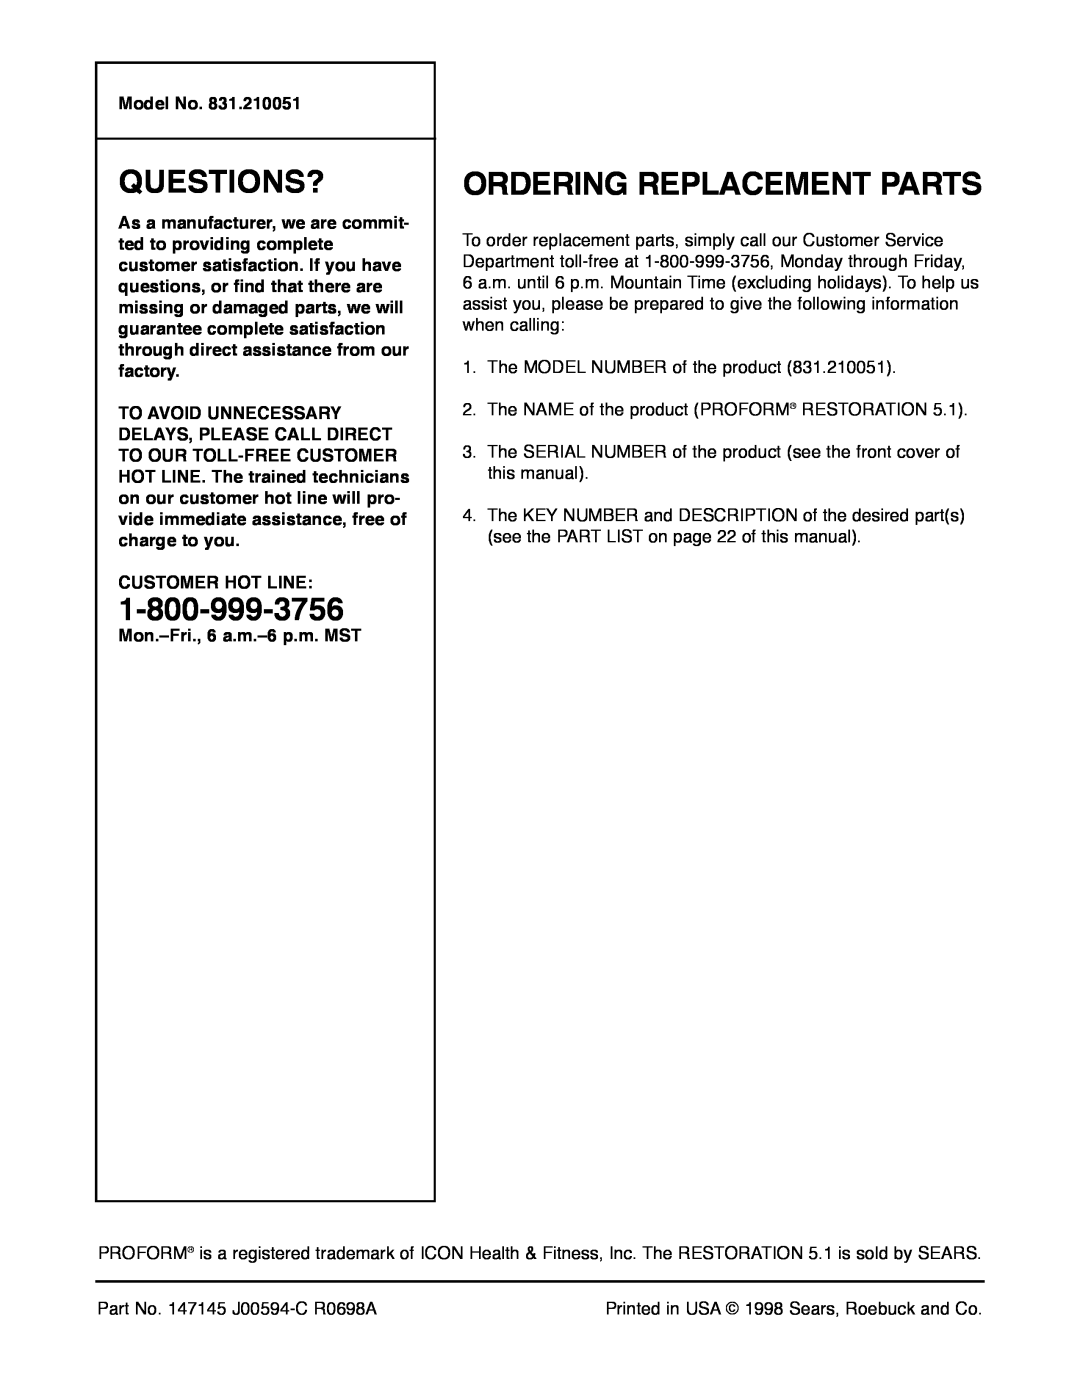 ProForm 831.210051 manual Ordering Replacement Parts, Model No, Questions?, Customer Hot Line, Mon.ÐFri., 6 a.m.Ð6 p.m. MST 